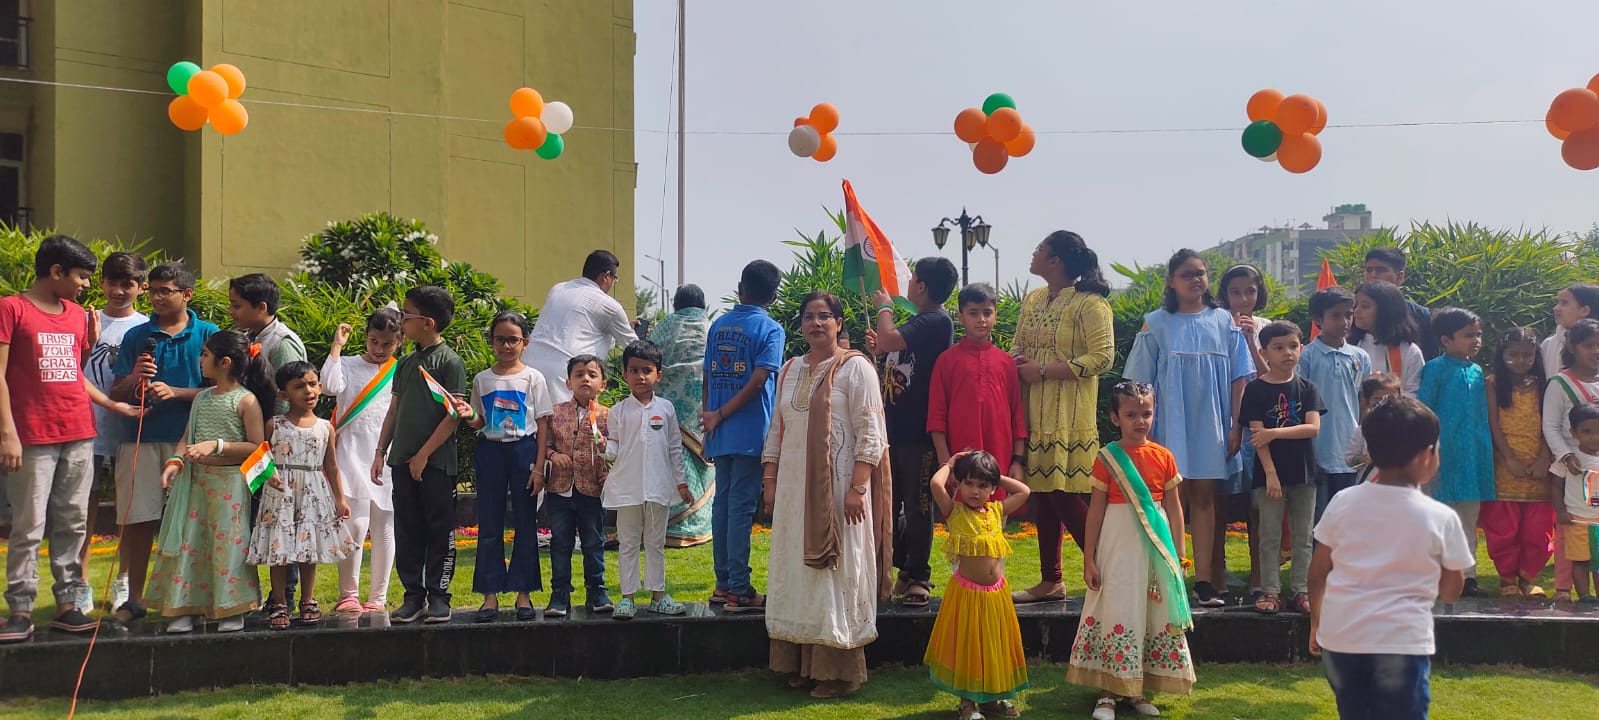 Vibrant Independence Day Celebration at Indosam 75, Sector 75, Noida